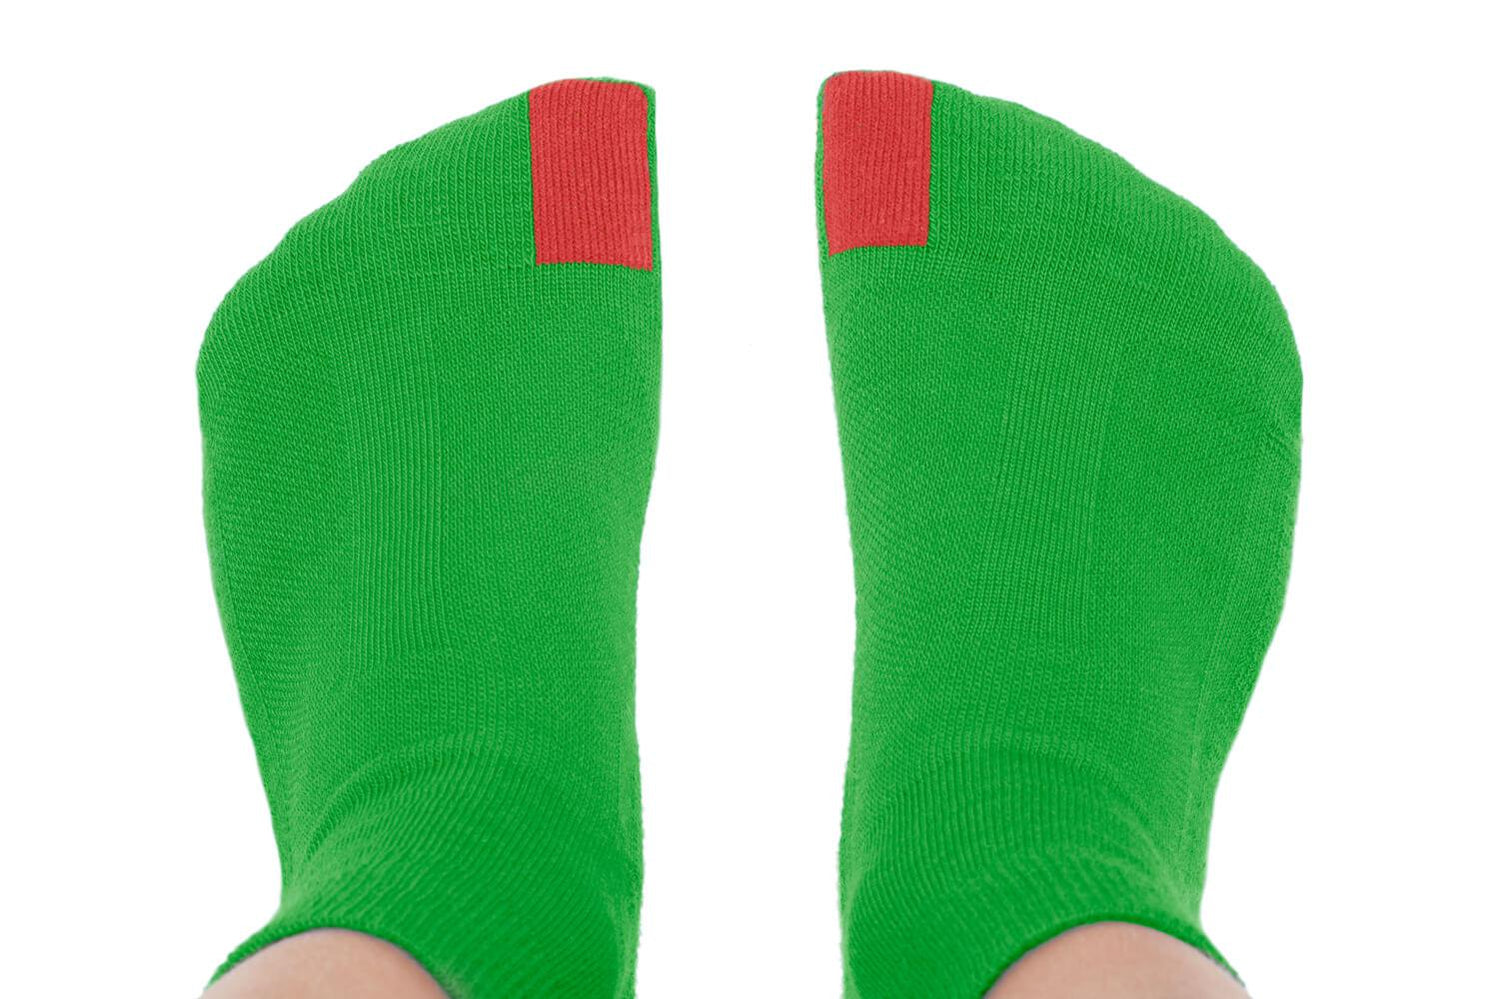 Plus12 Calcetines cortos algodon verdes-plus12-Cacles Barefoot